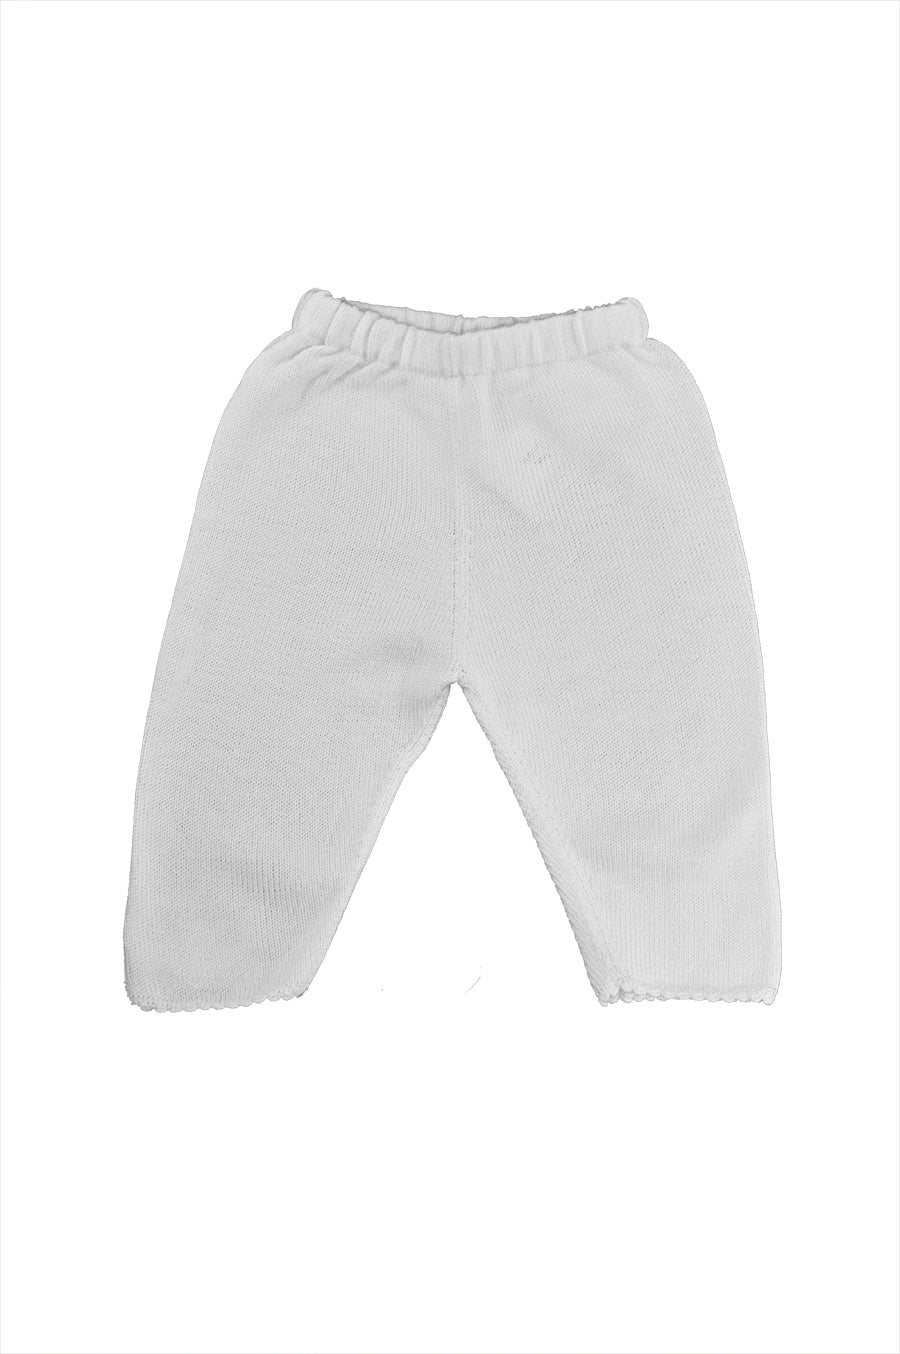 White Knit Pant - Little Threads Inc. Children's Clothing